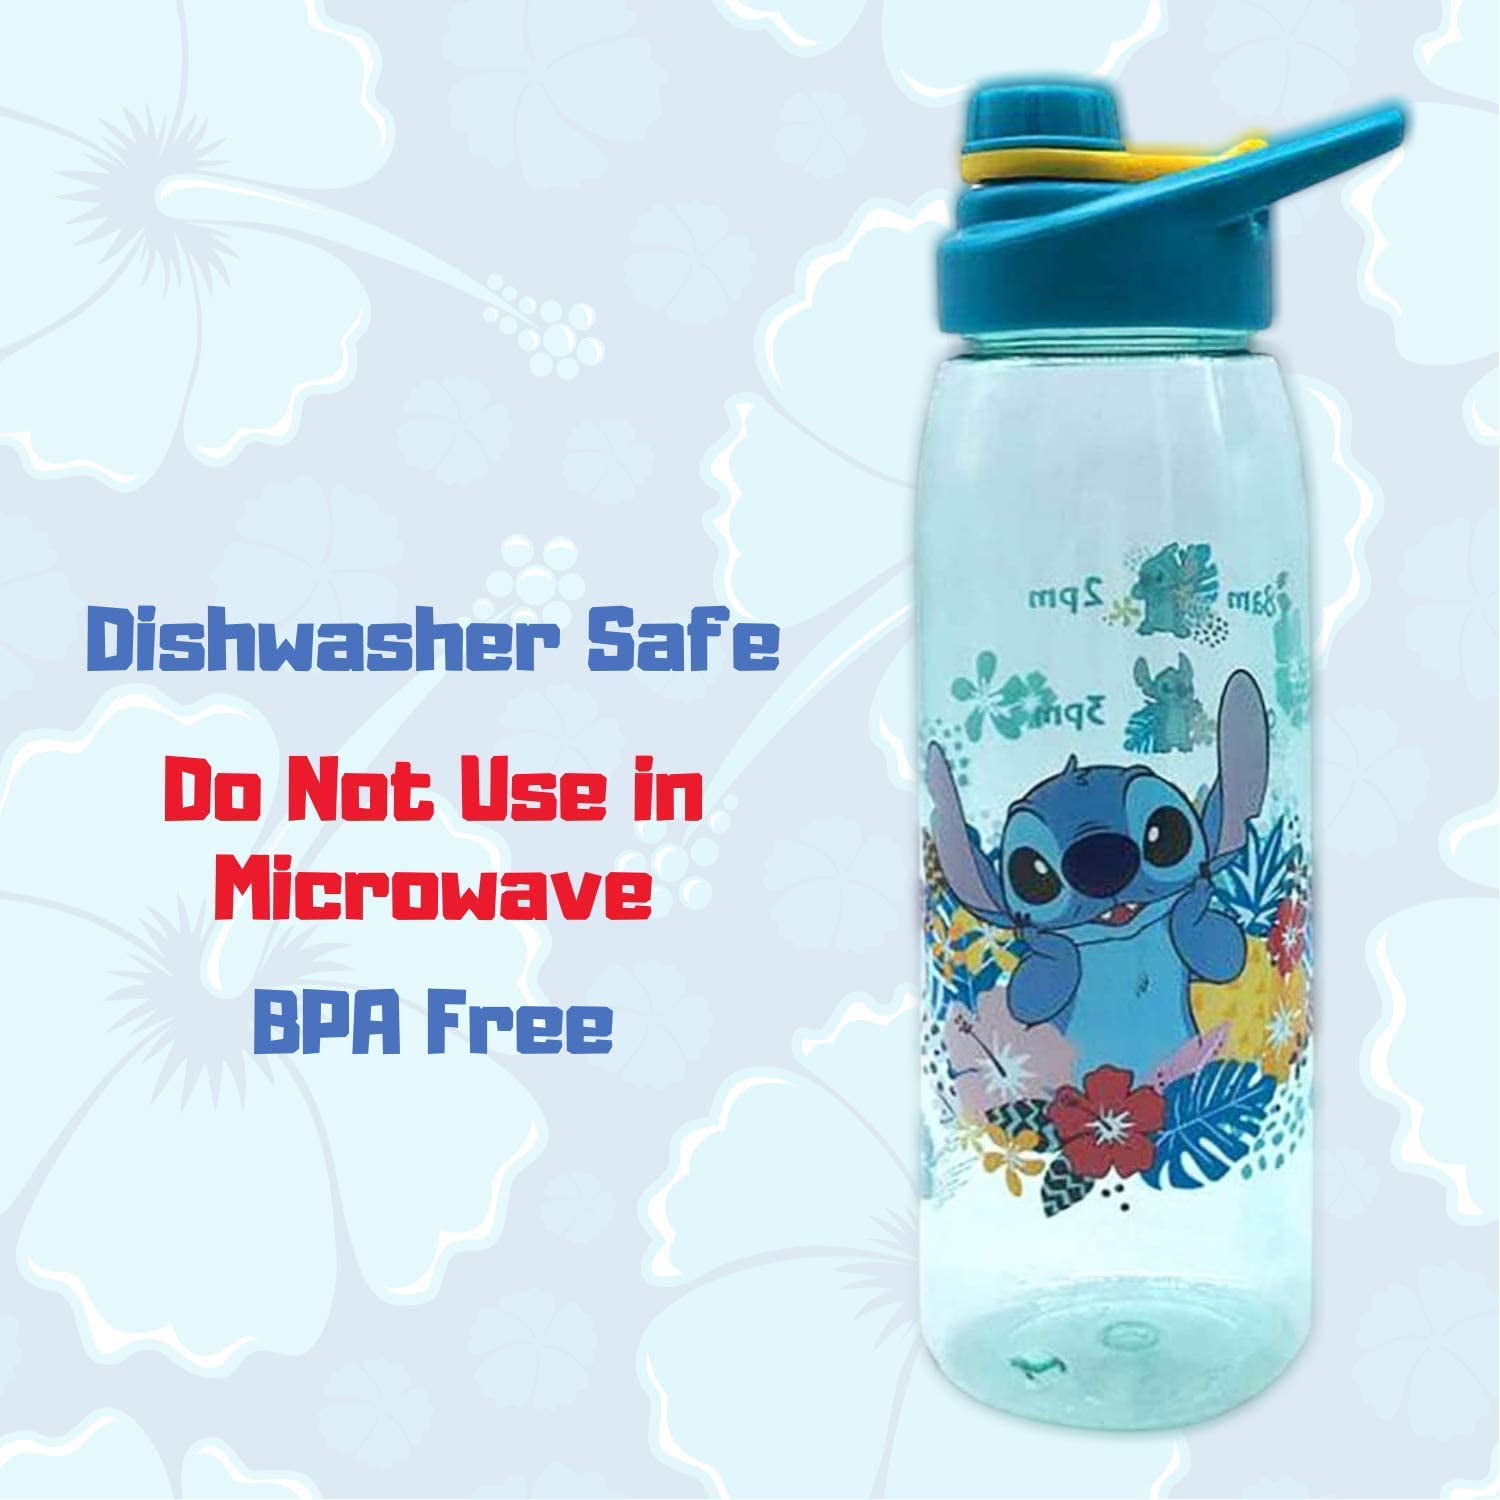 Lilo and Stitch Beach Vibes Aluminum Screw Cap Water Bottle